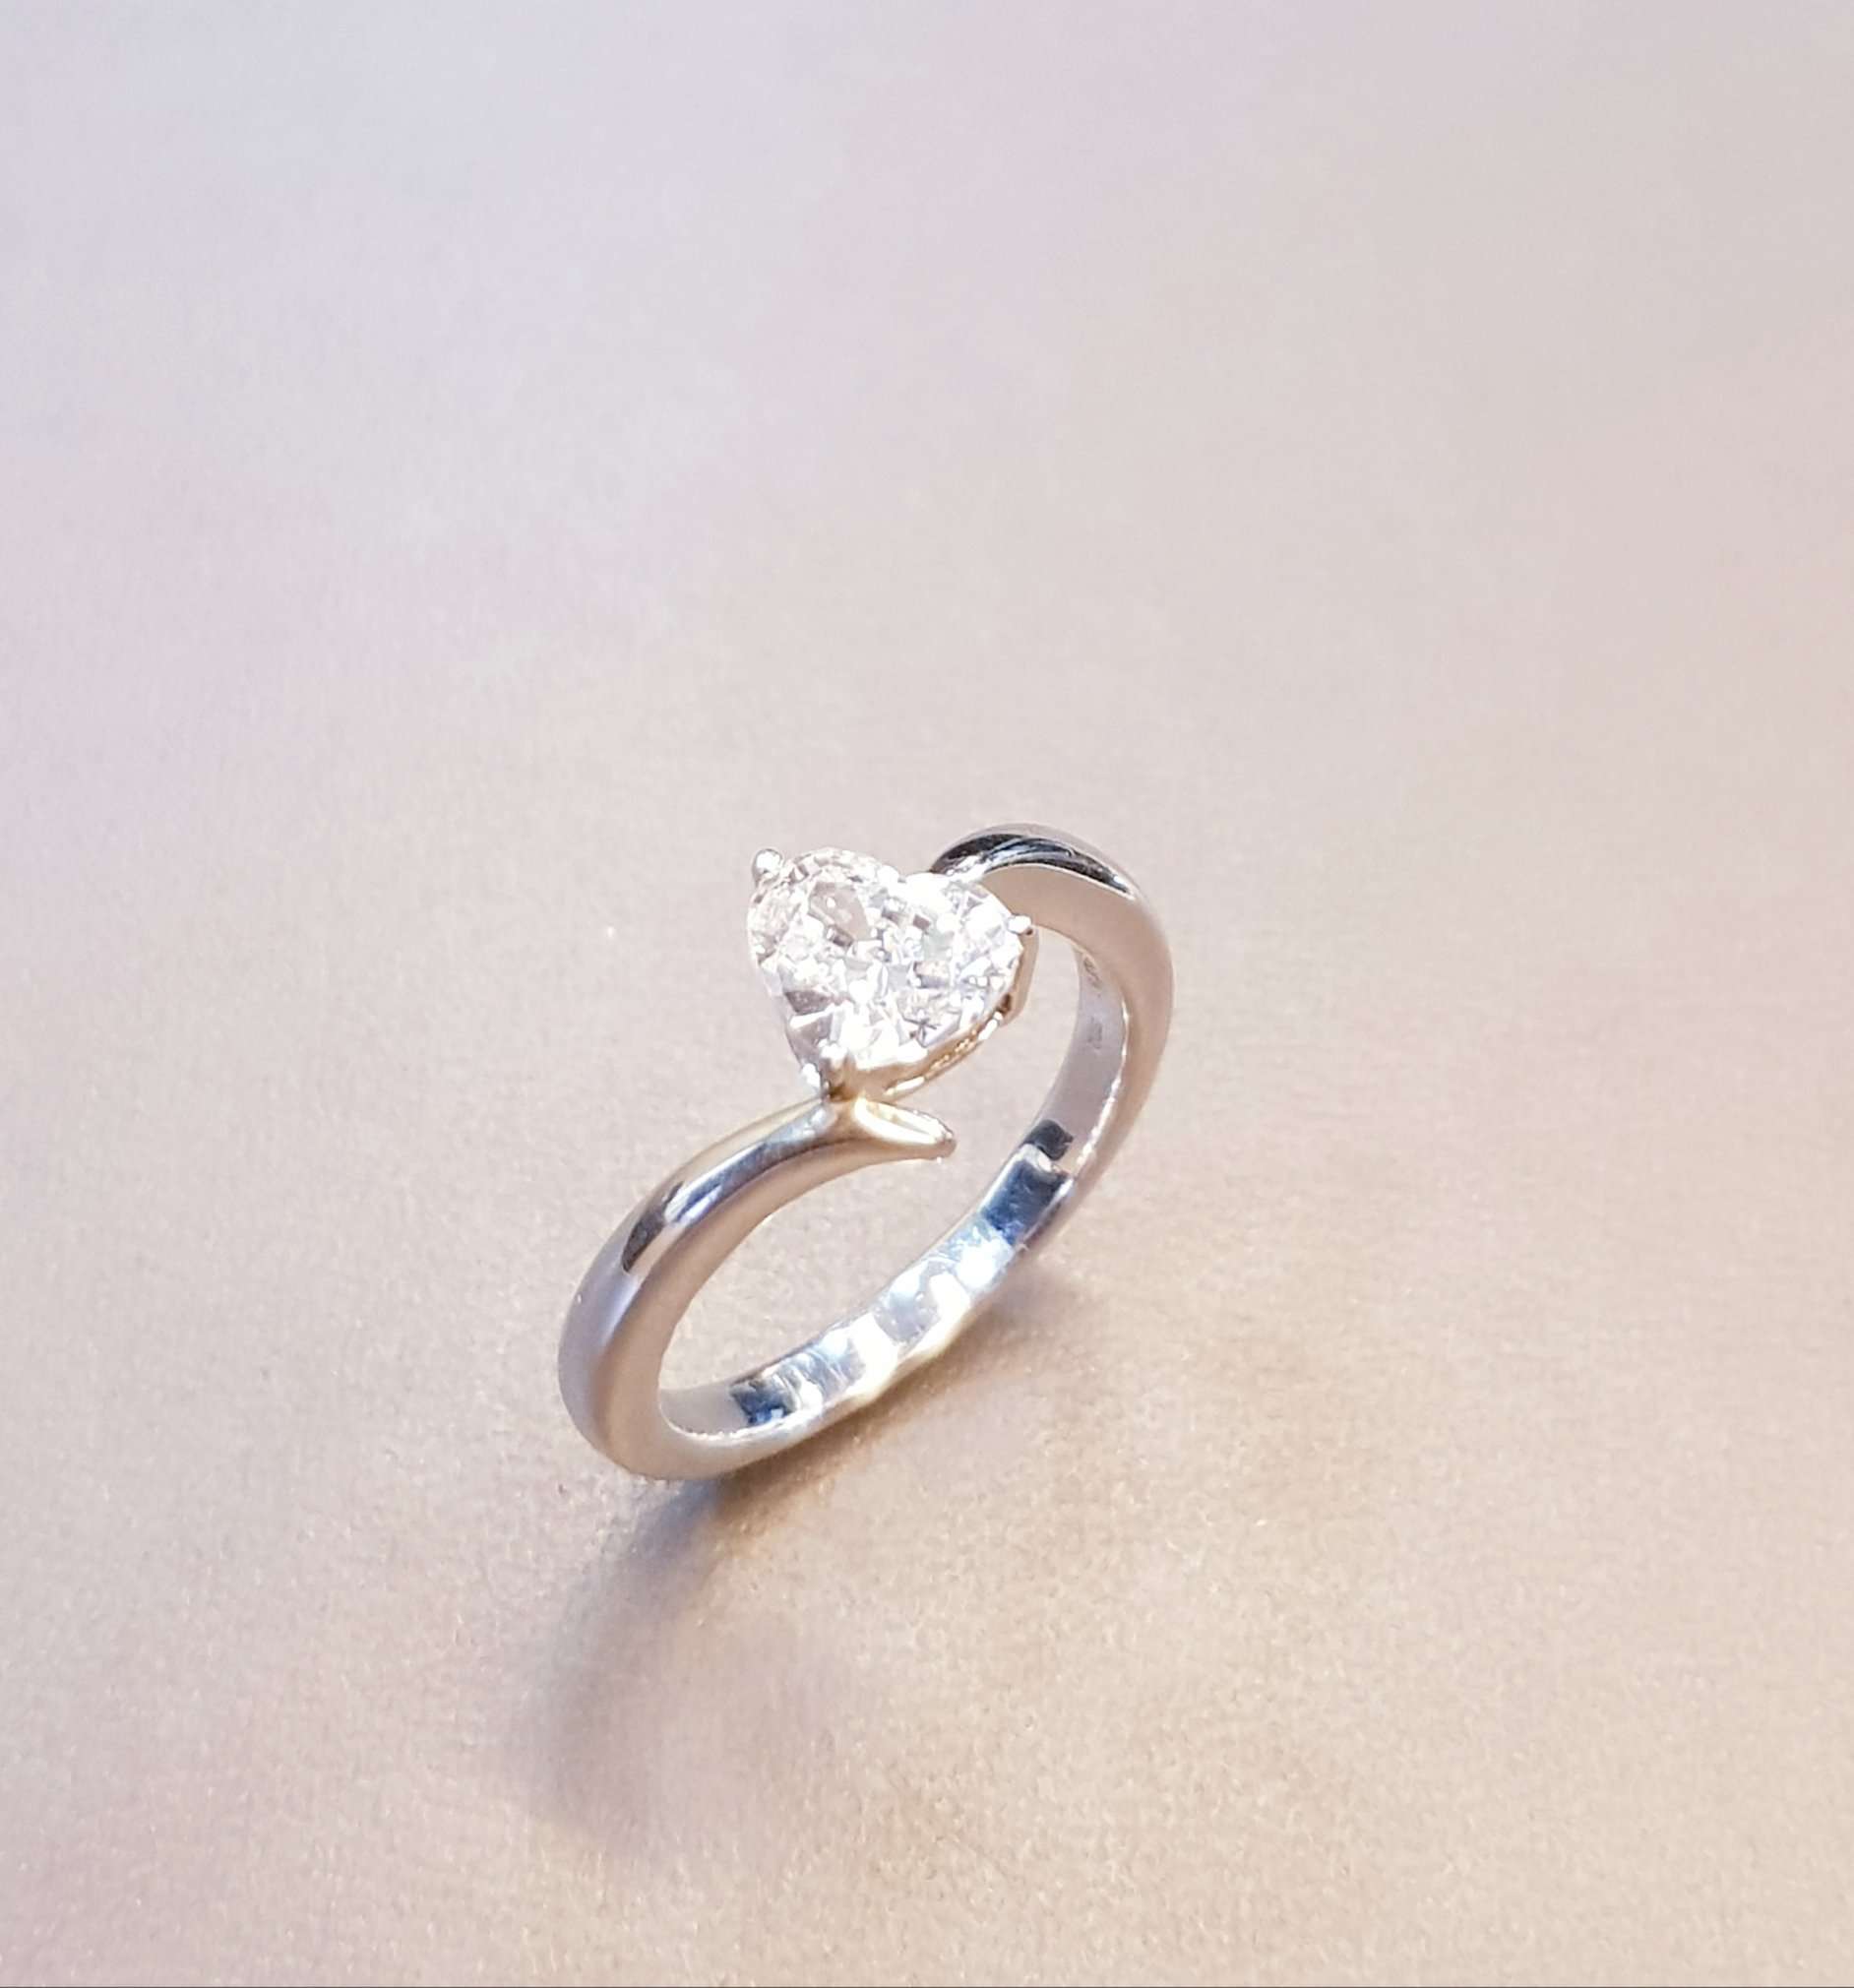 Shank Simulated Diamond Heart shaped Ring